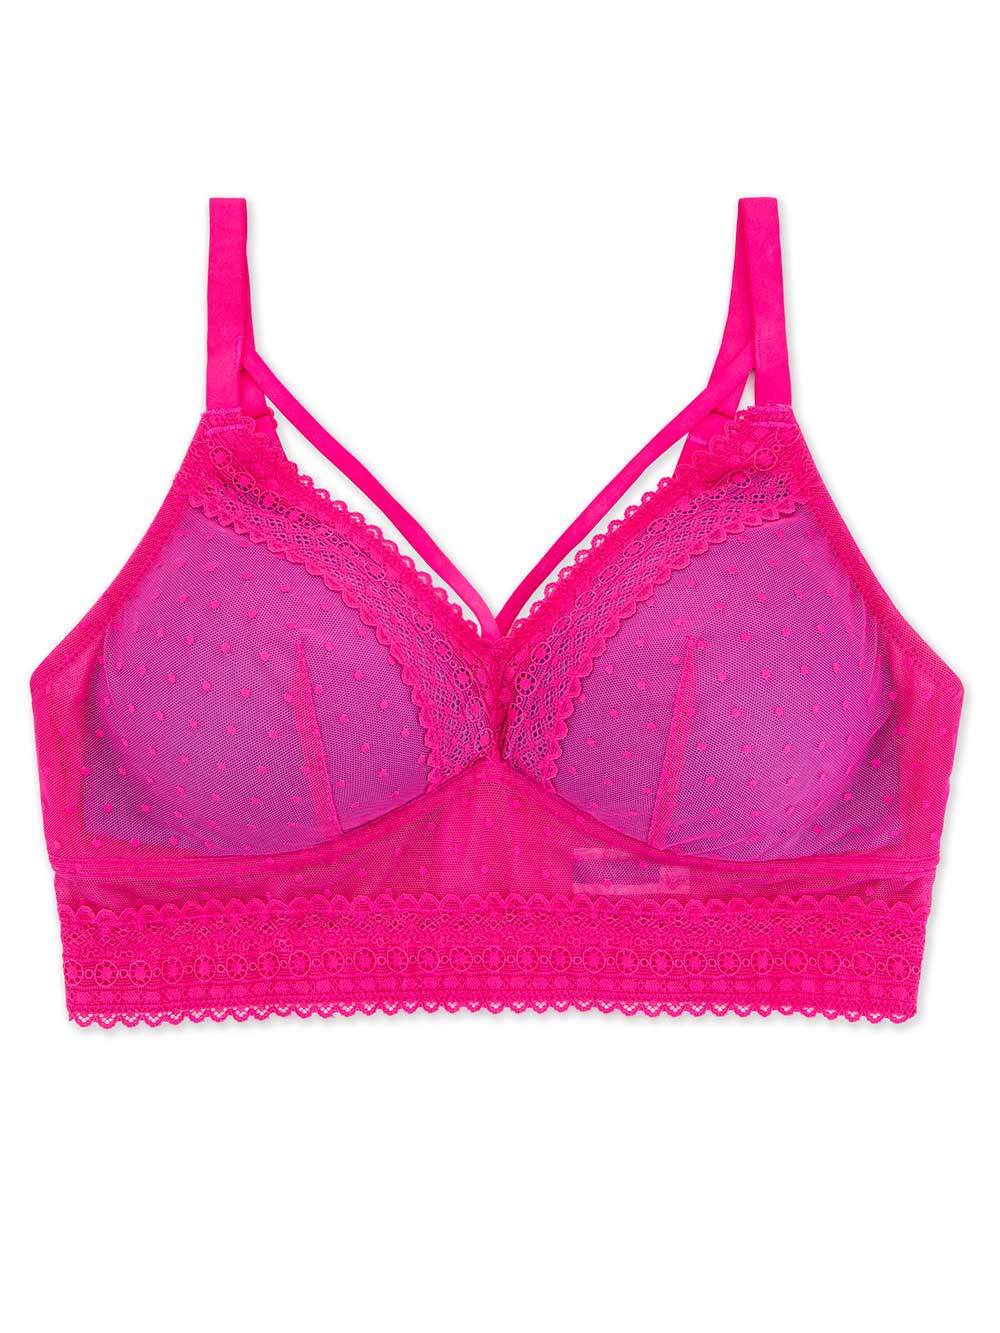 Parfait Mia Dot Wire-free Padded Mesh Bralette - Bright Pink - HauteFlair